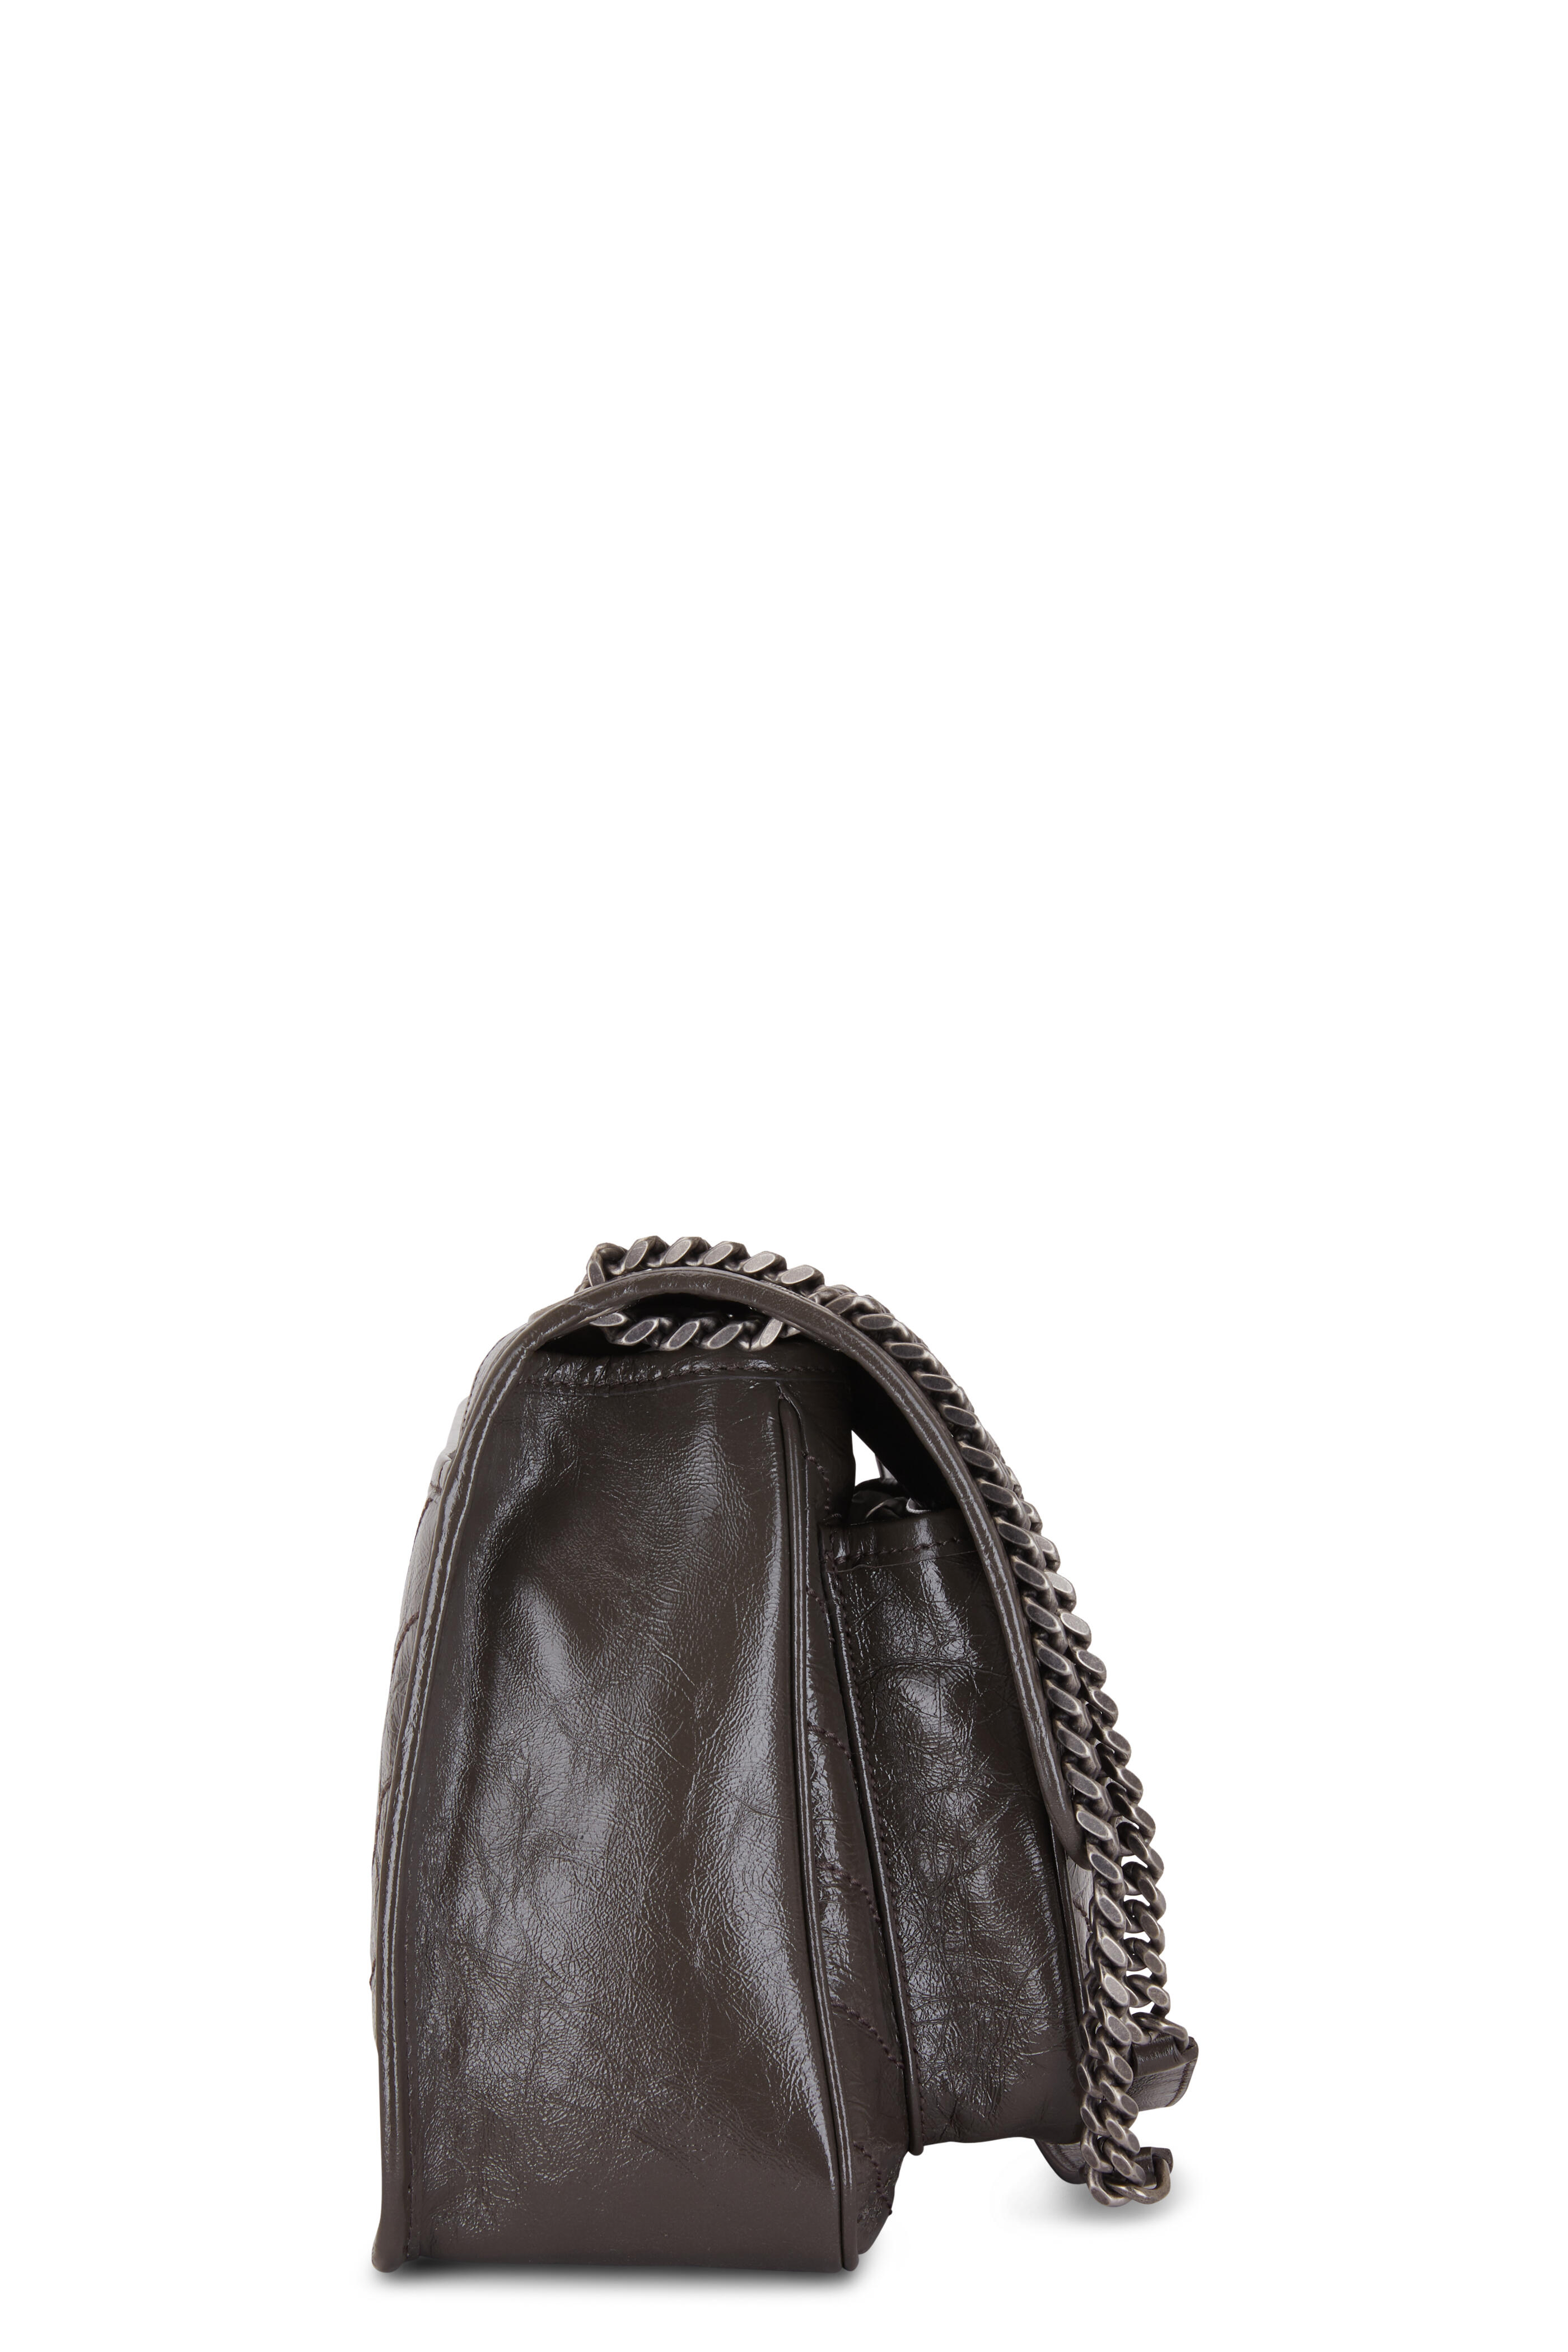 Saint Laurent Natural Raffia & Leather Medium Niki Bag - Preloved YSL